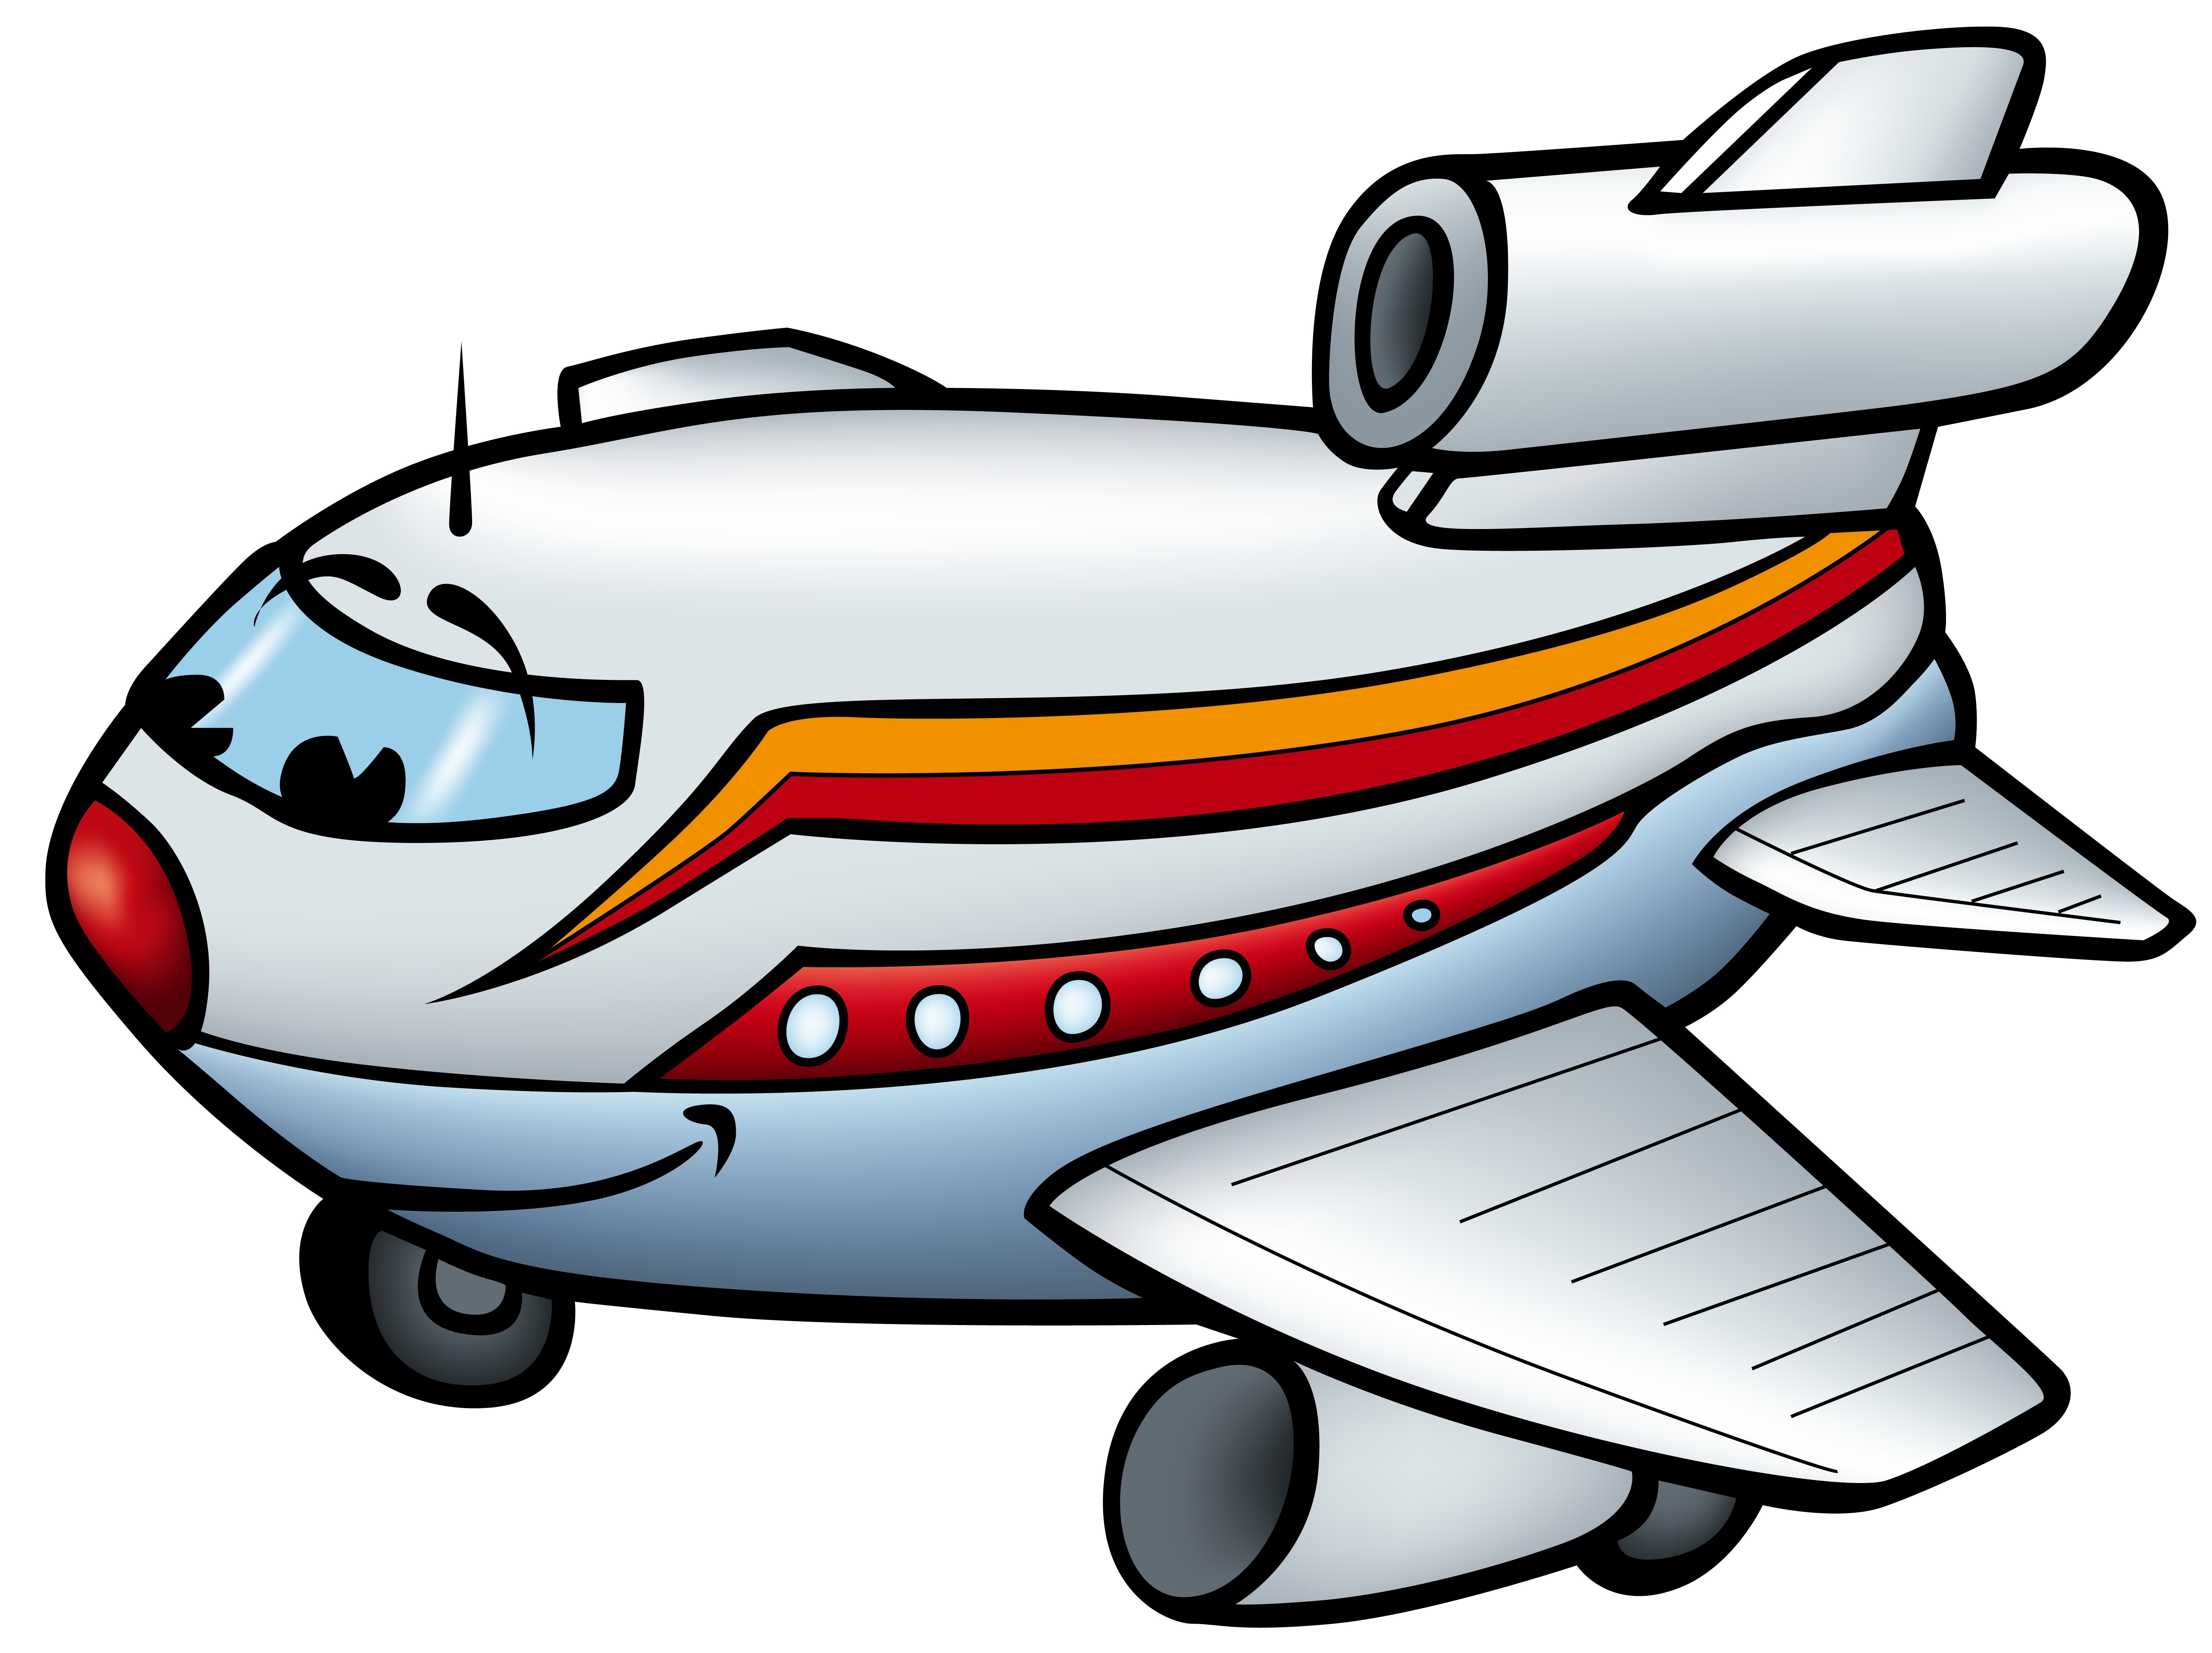 Free Airplane Cartoon Image, Download Free Airplane Cartoon Image png